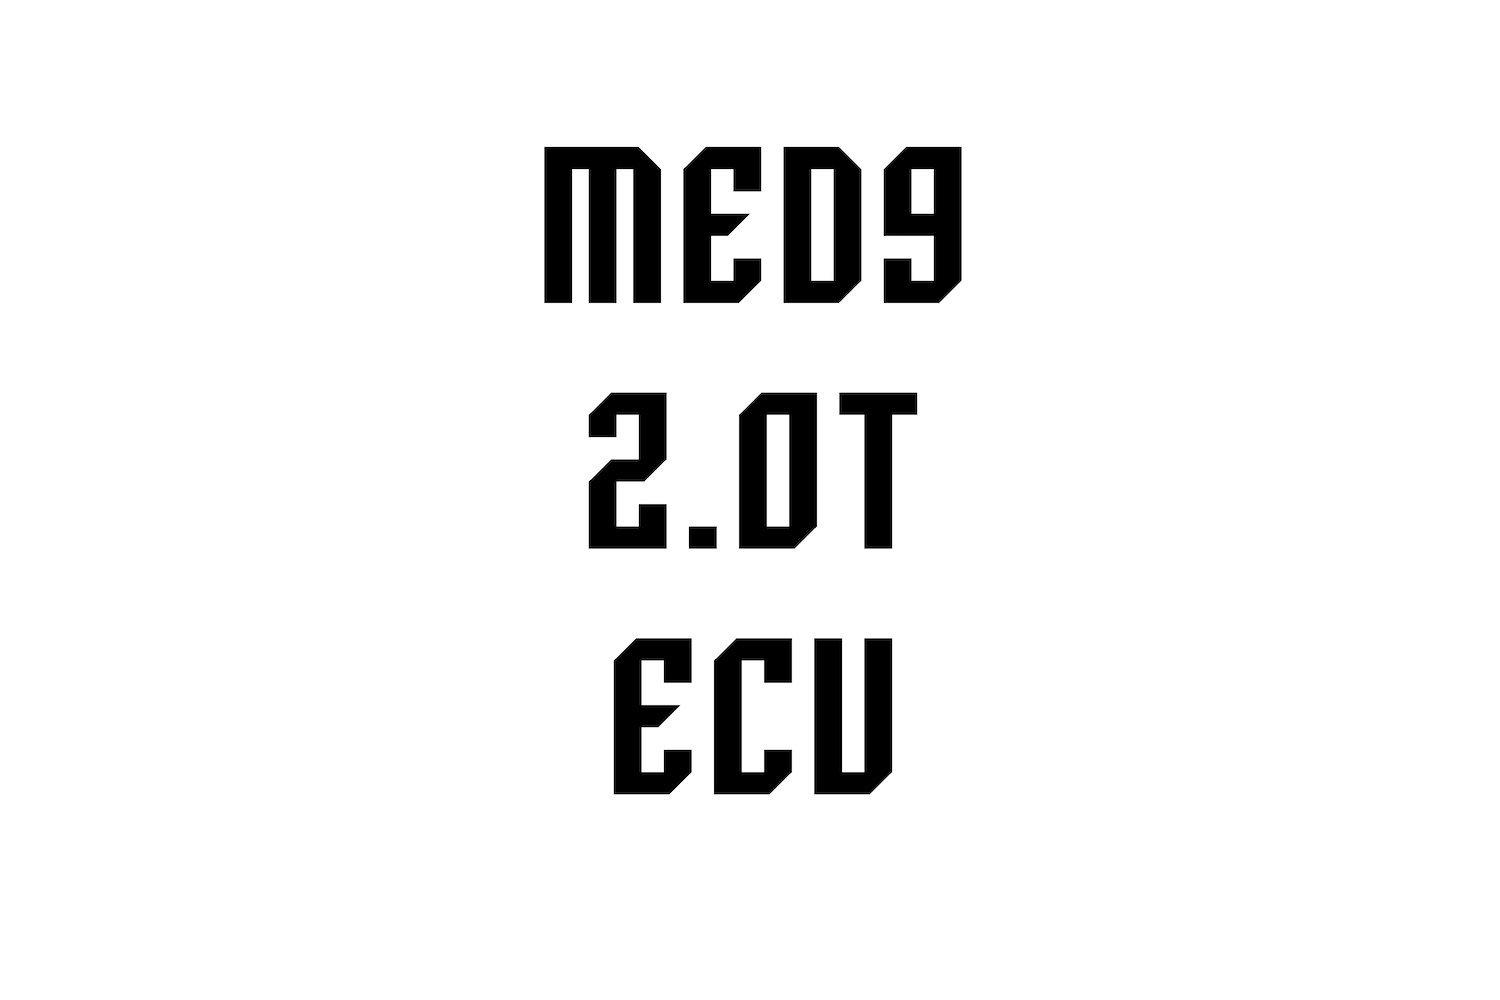 06a-technik - Stock MED9 2.0T ECU - 